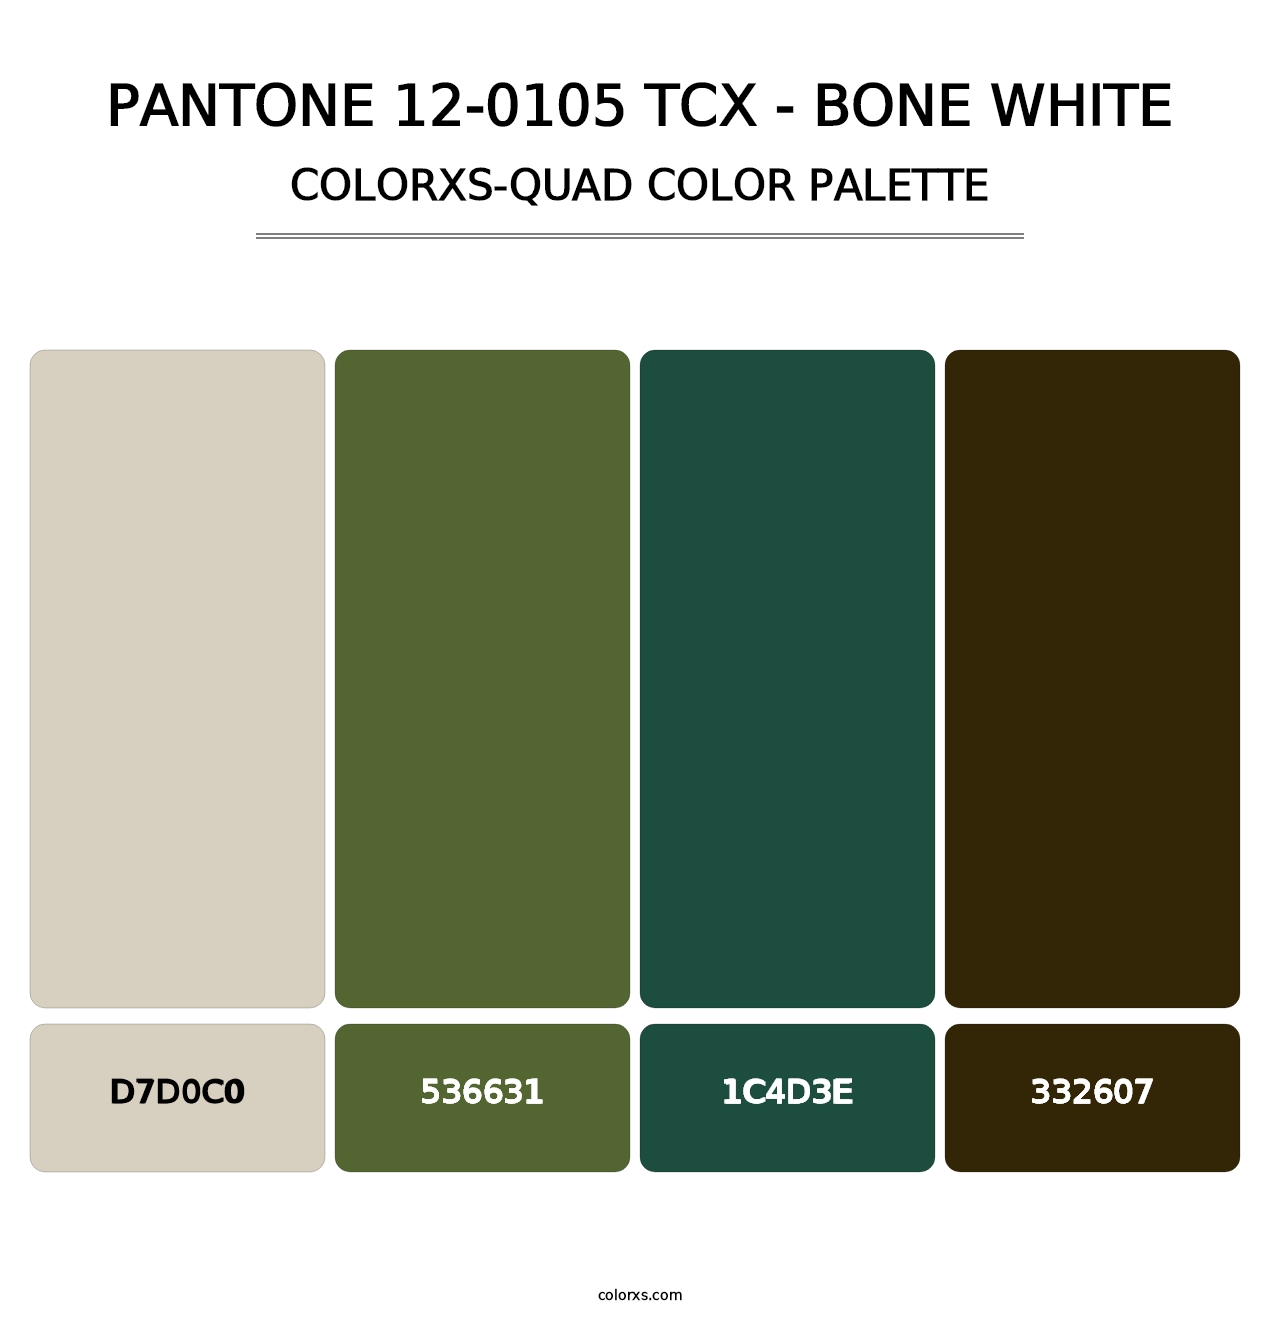 PANTONE 12-0105 TCX - Bone White - Colorxs Quad Palette